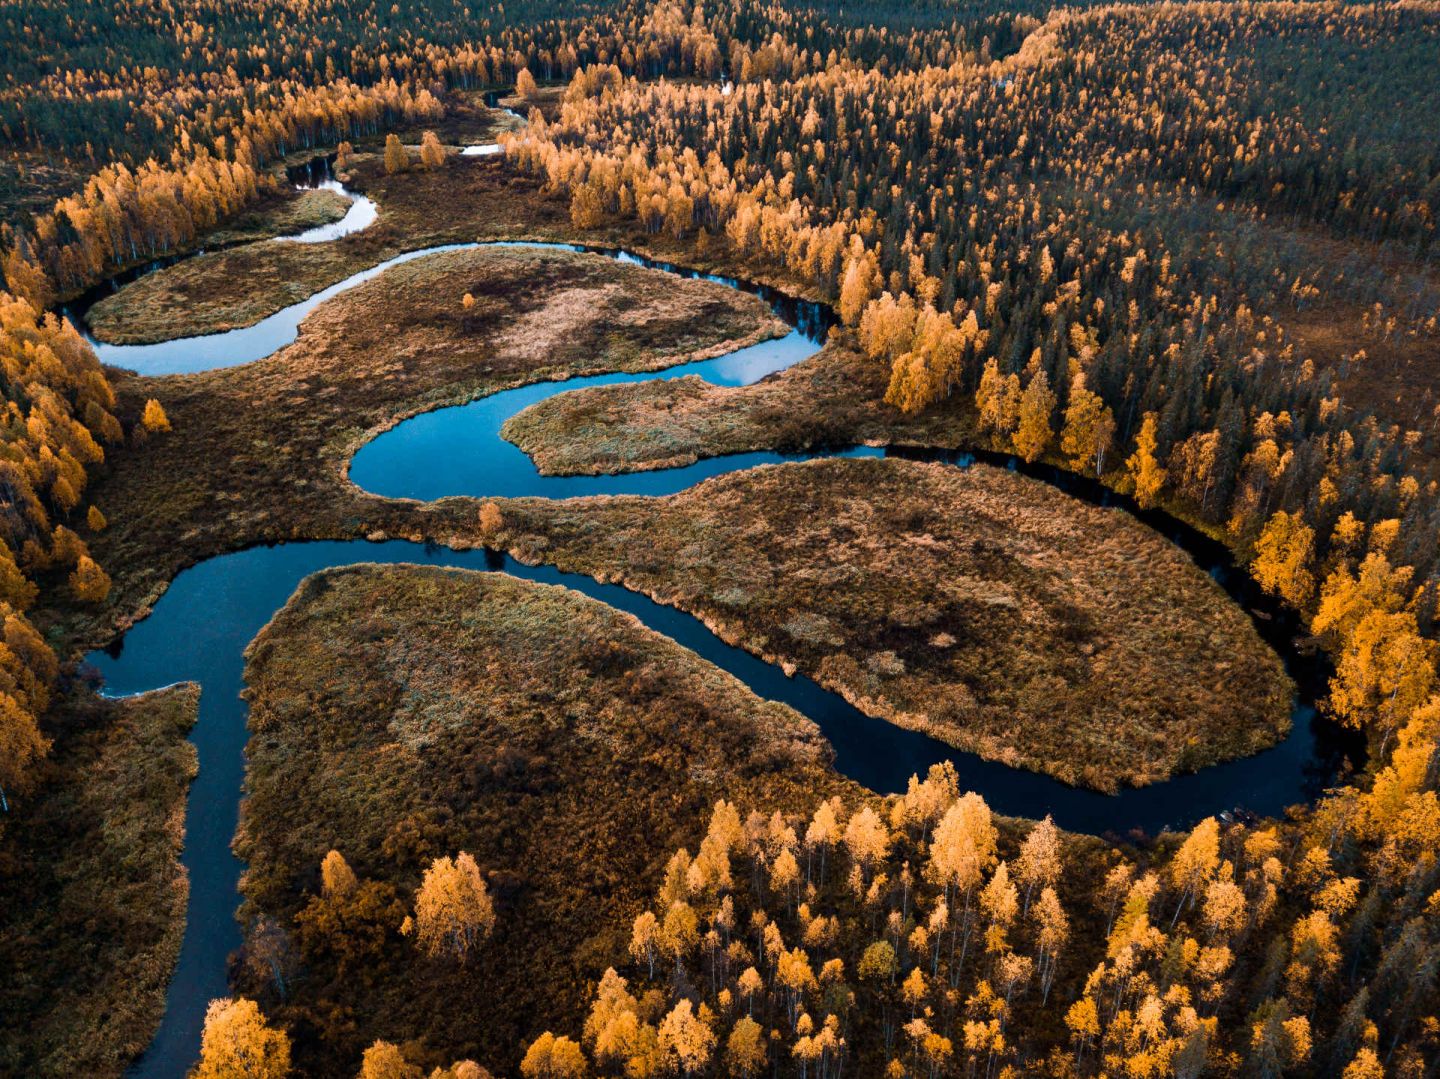 A river runs through the wilderness in Salla, Finland